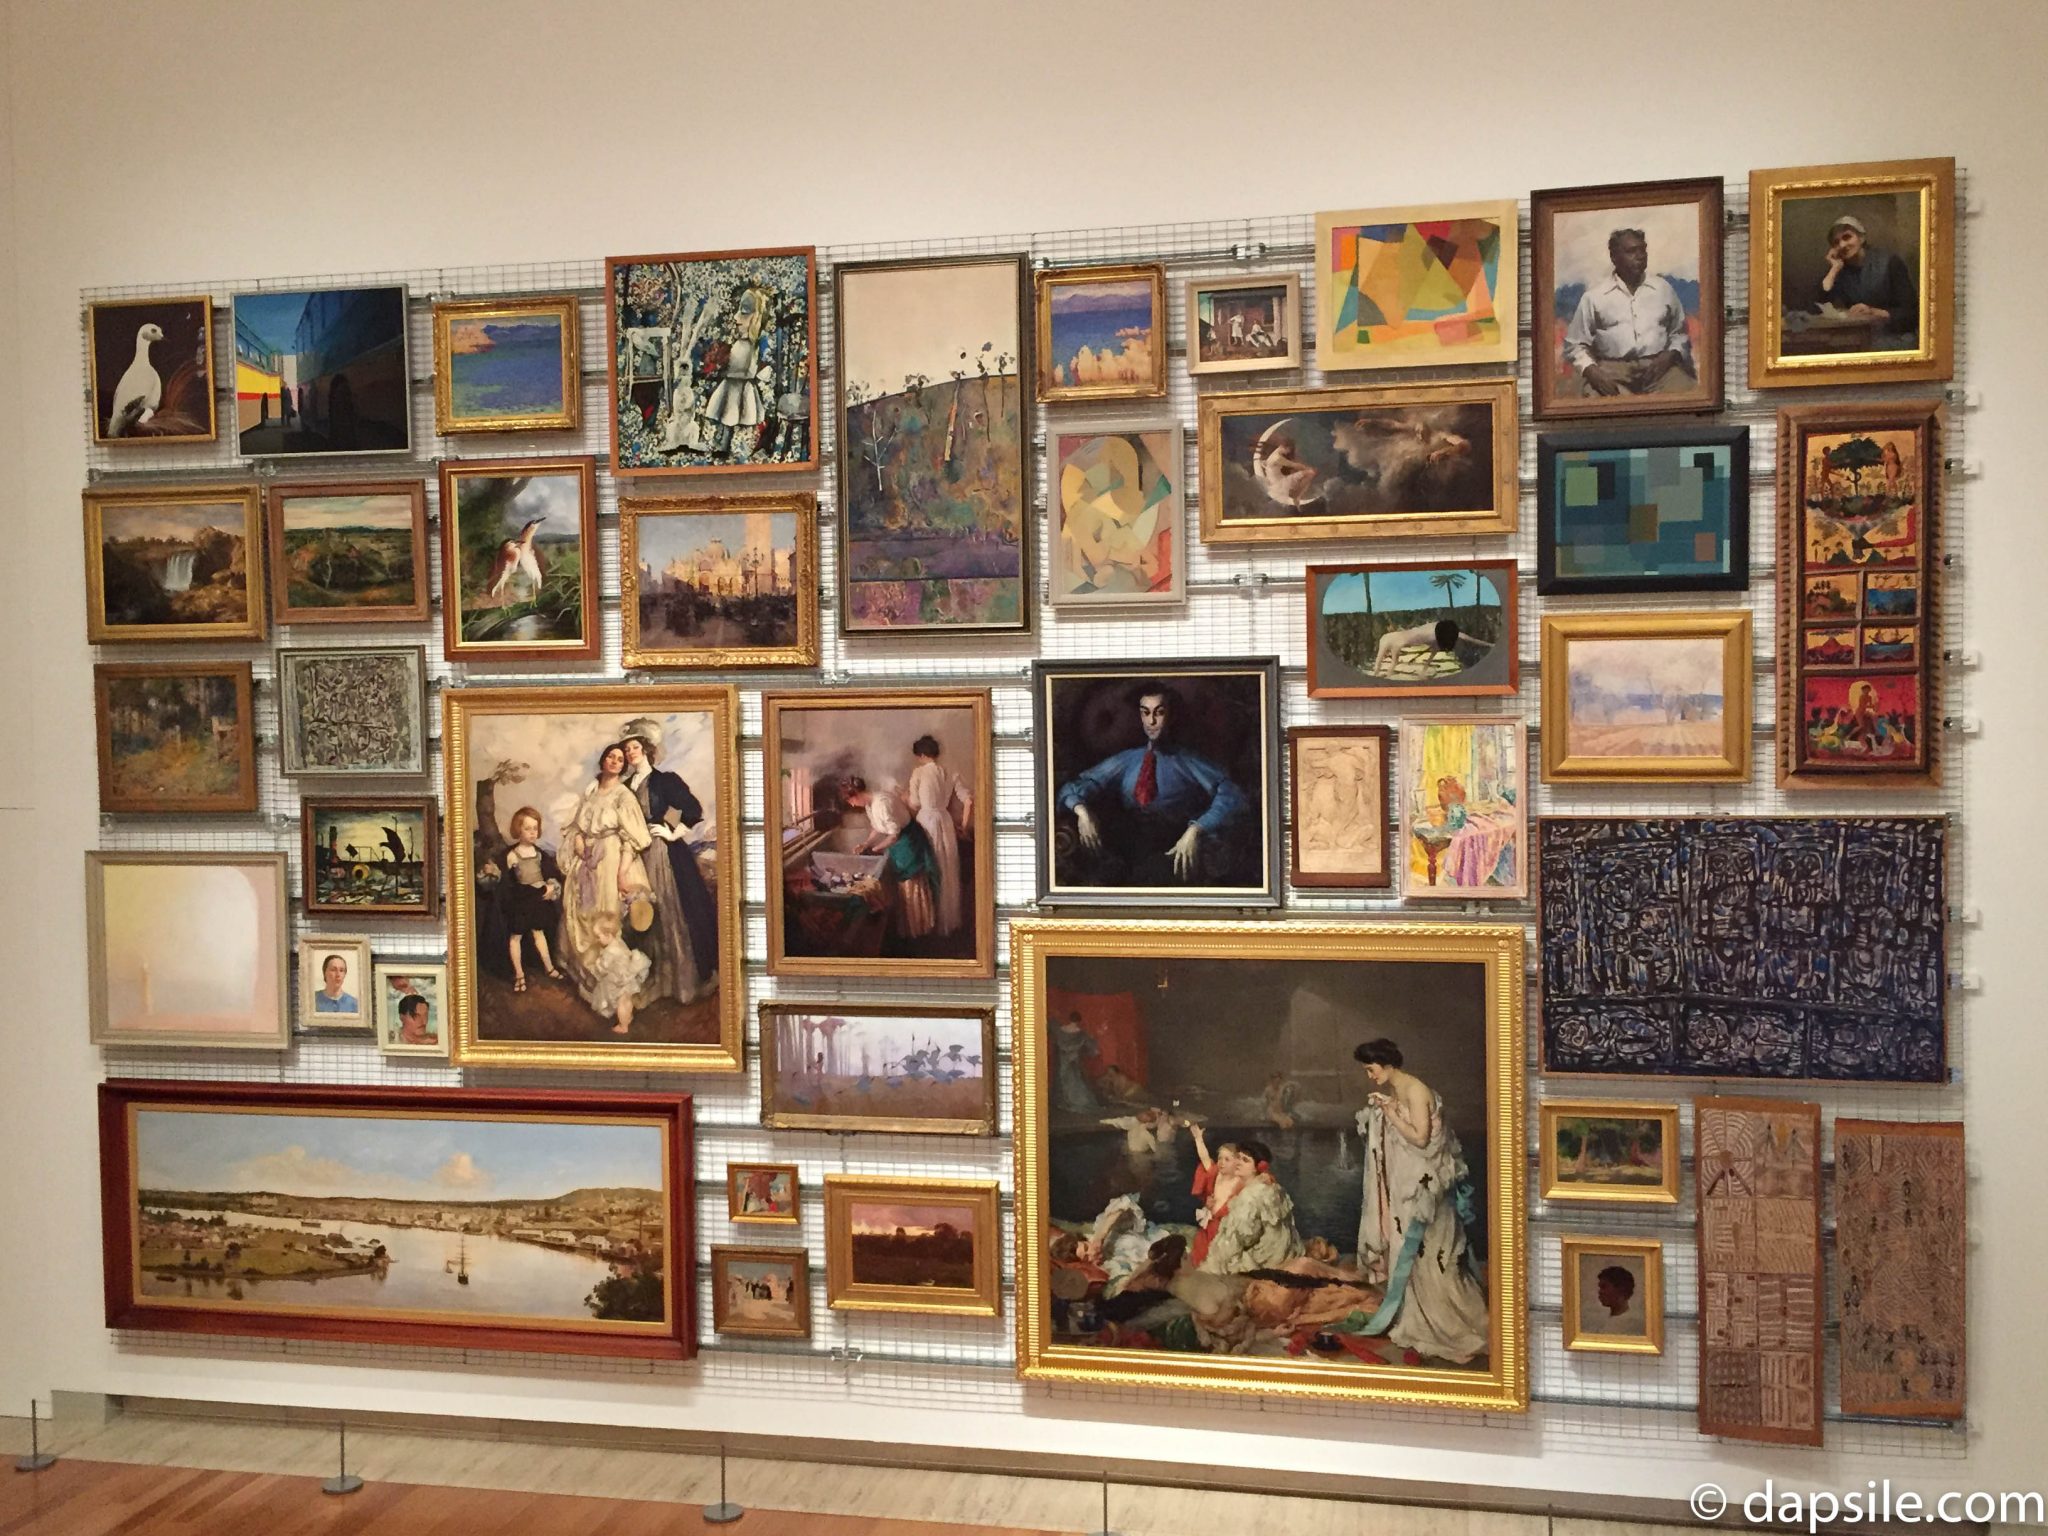 Queensland Art Gallery Art Display with Paintings